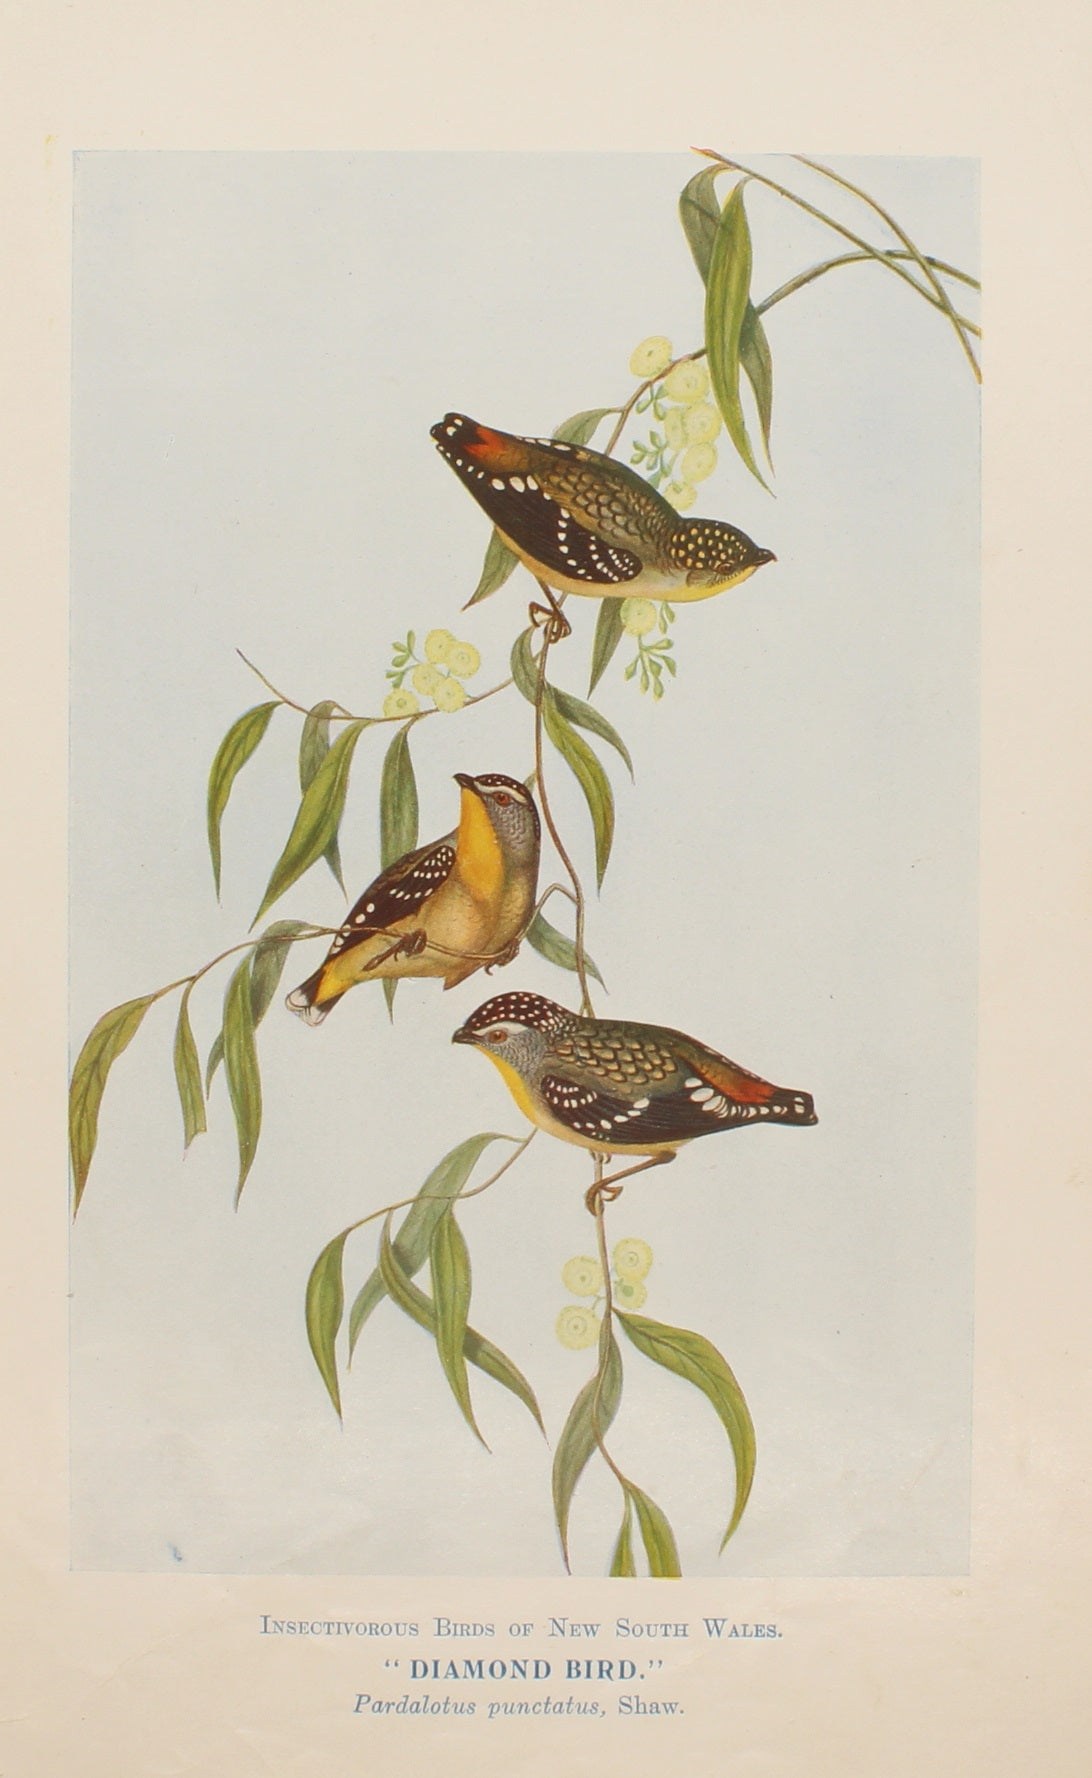 Bird, North Alfred John, Diamond bird, Insectivorous Birds of NSW, 1896-7